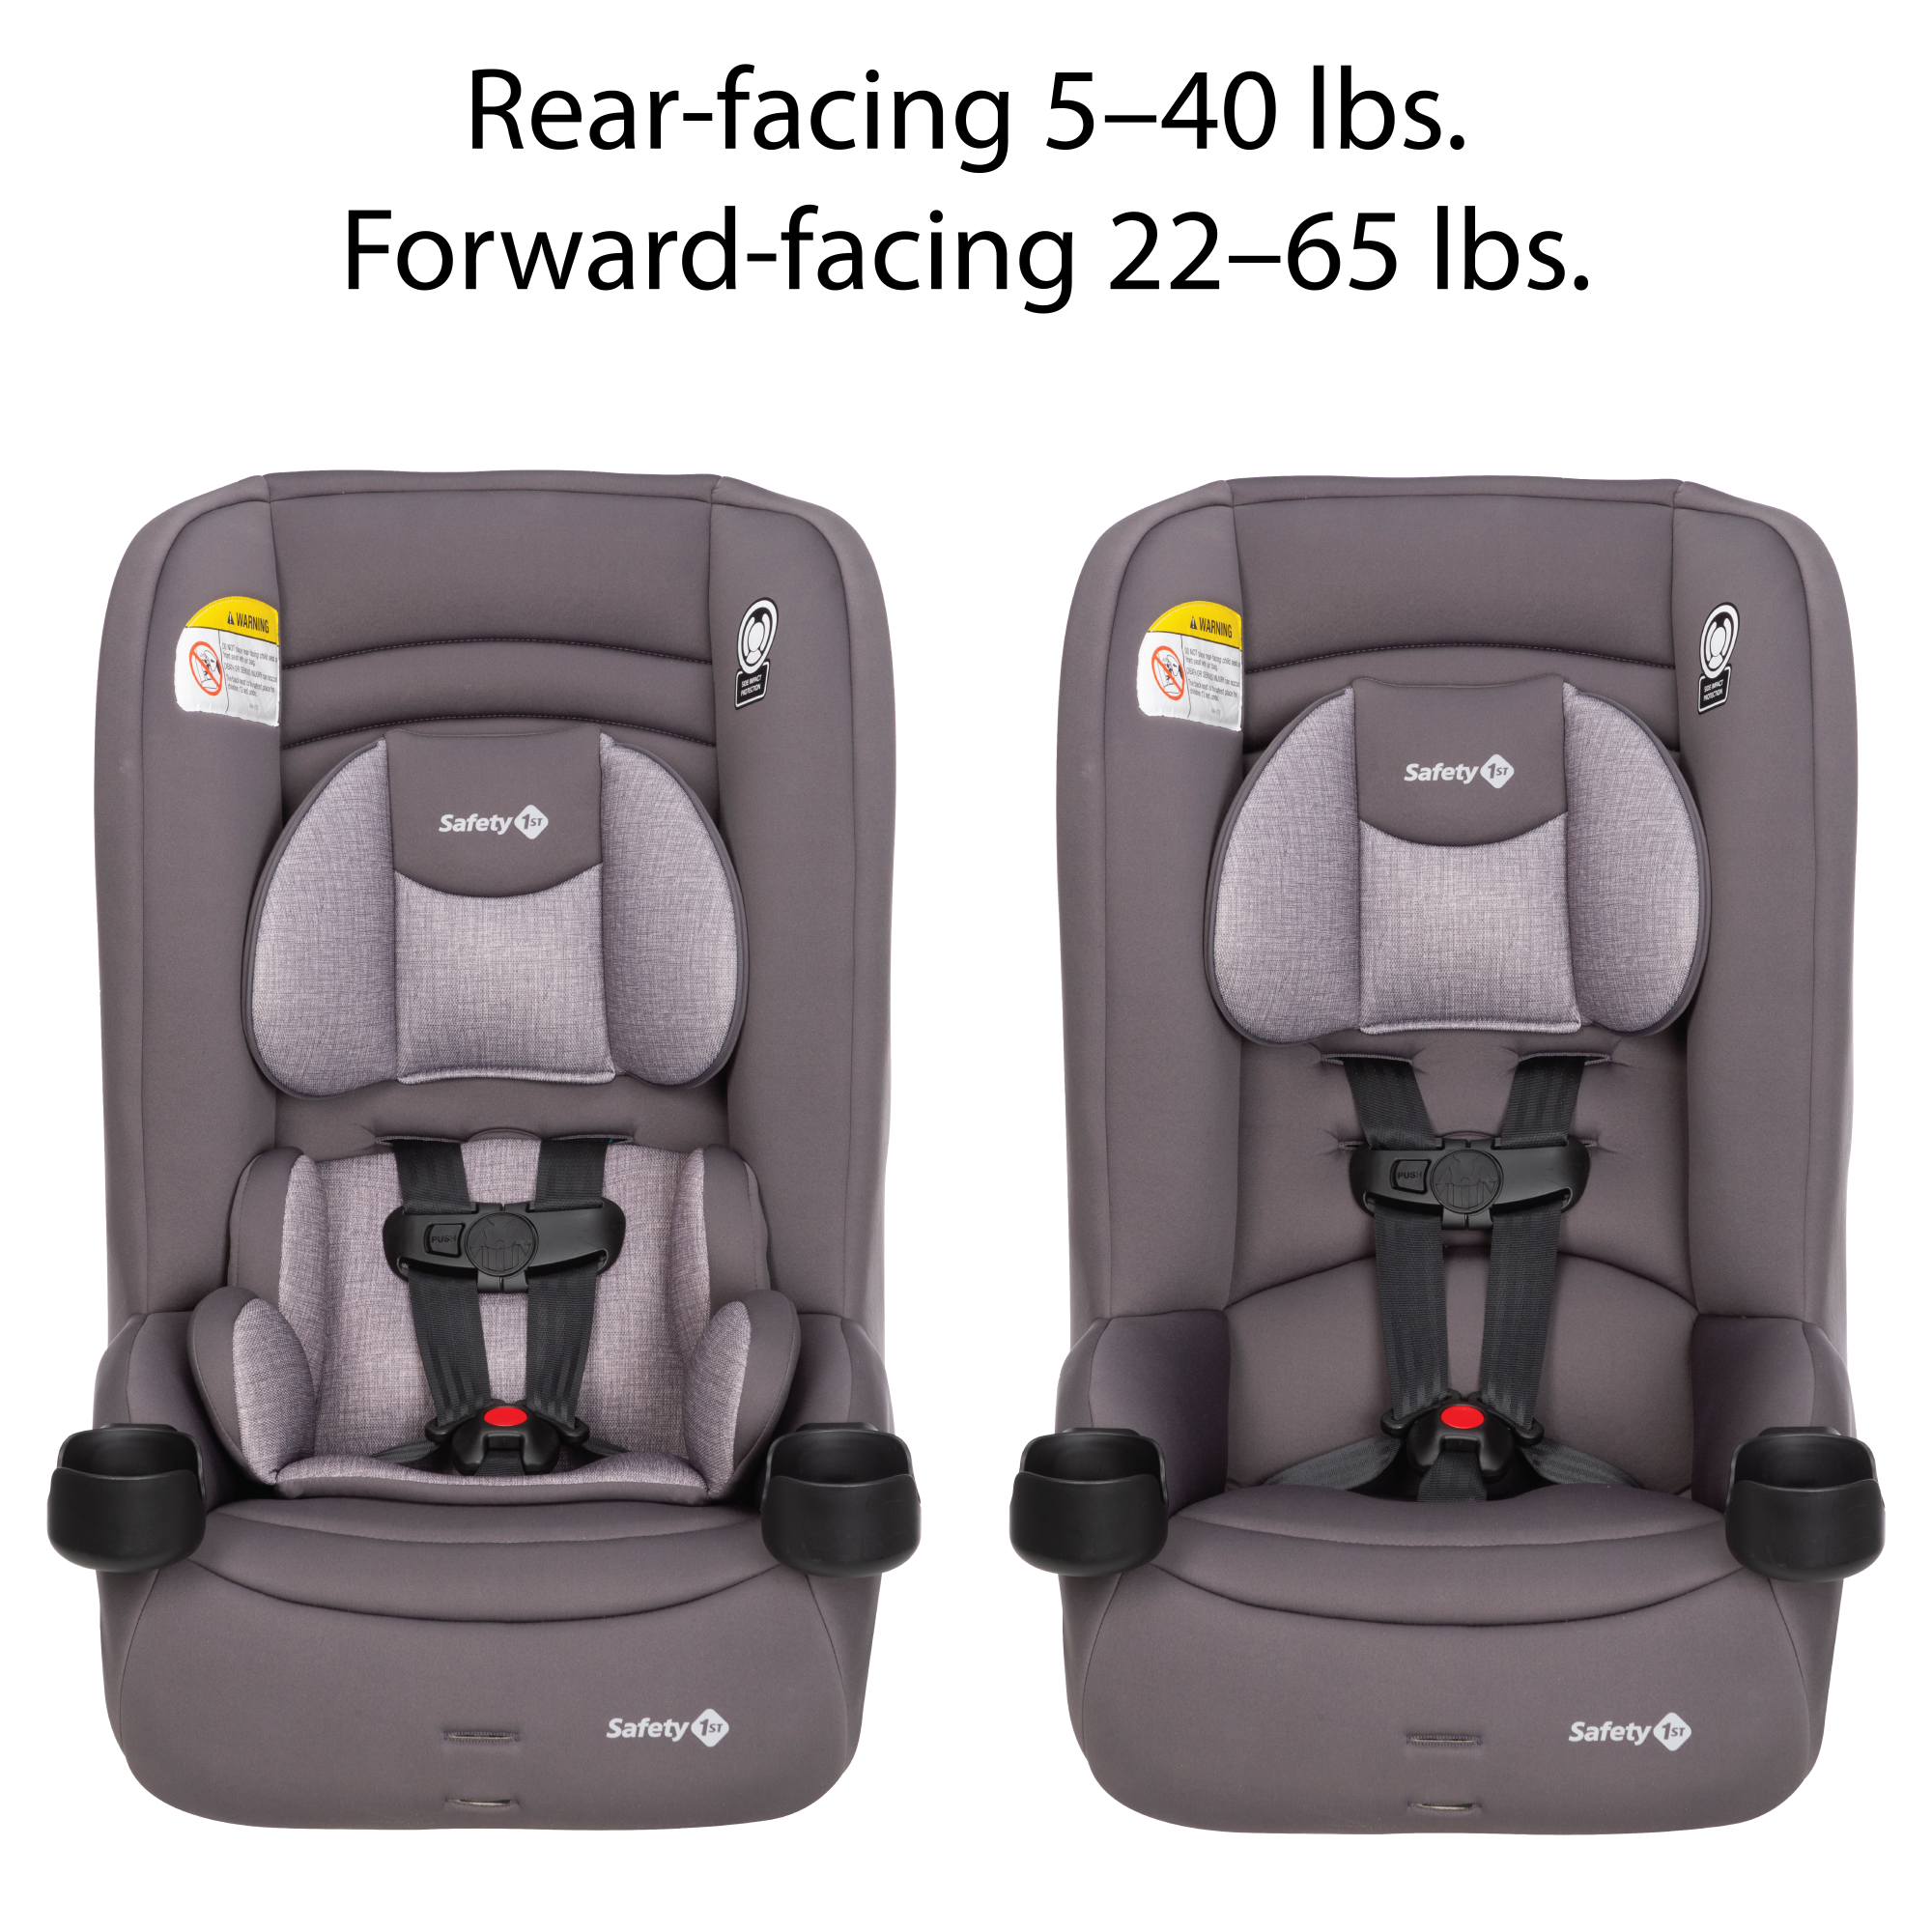 Jive 2-in-1 Convertible Car Seat - rear-facing 5-40 lbs.; forward-facing 22-65 lbs.